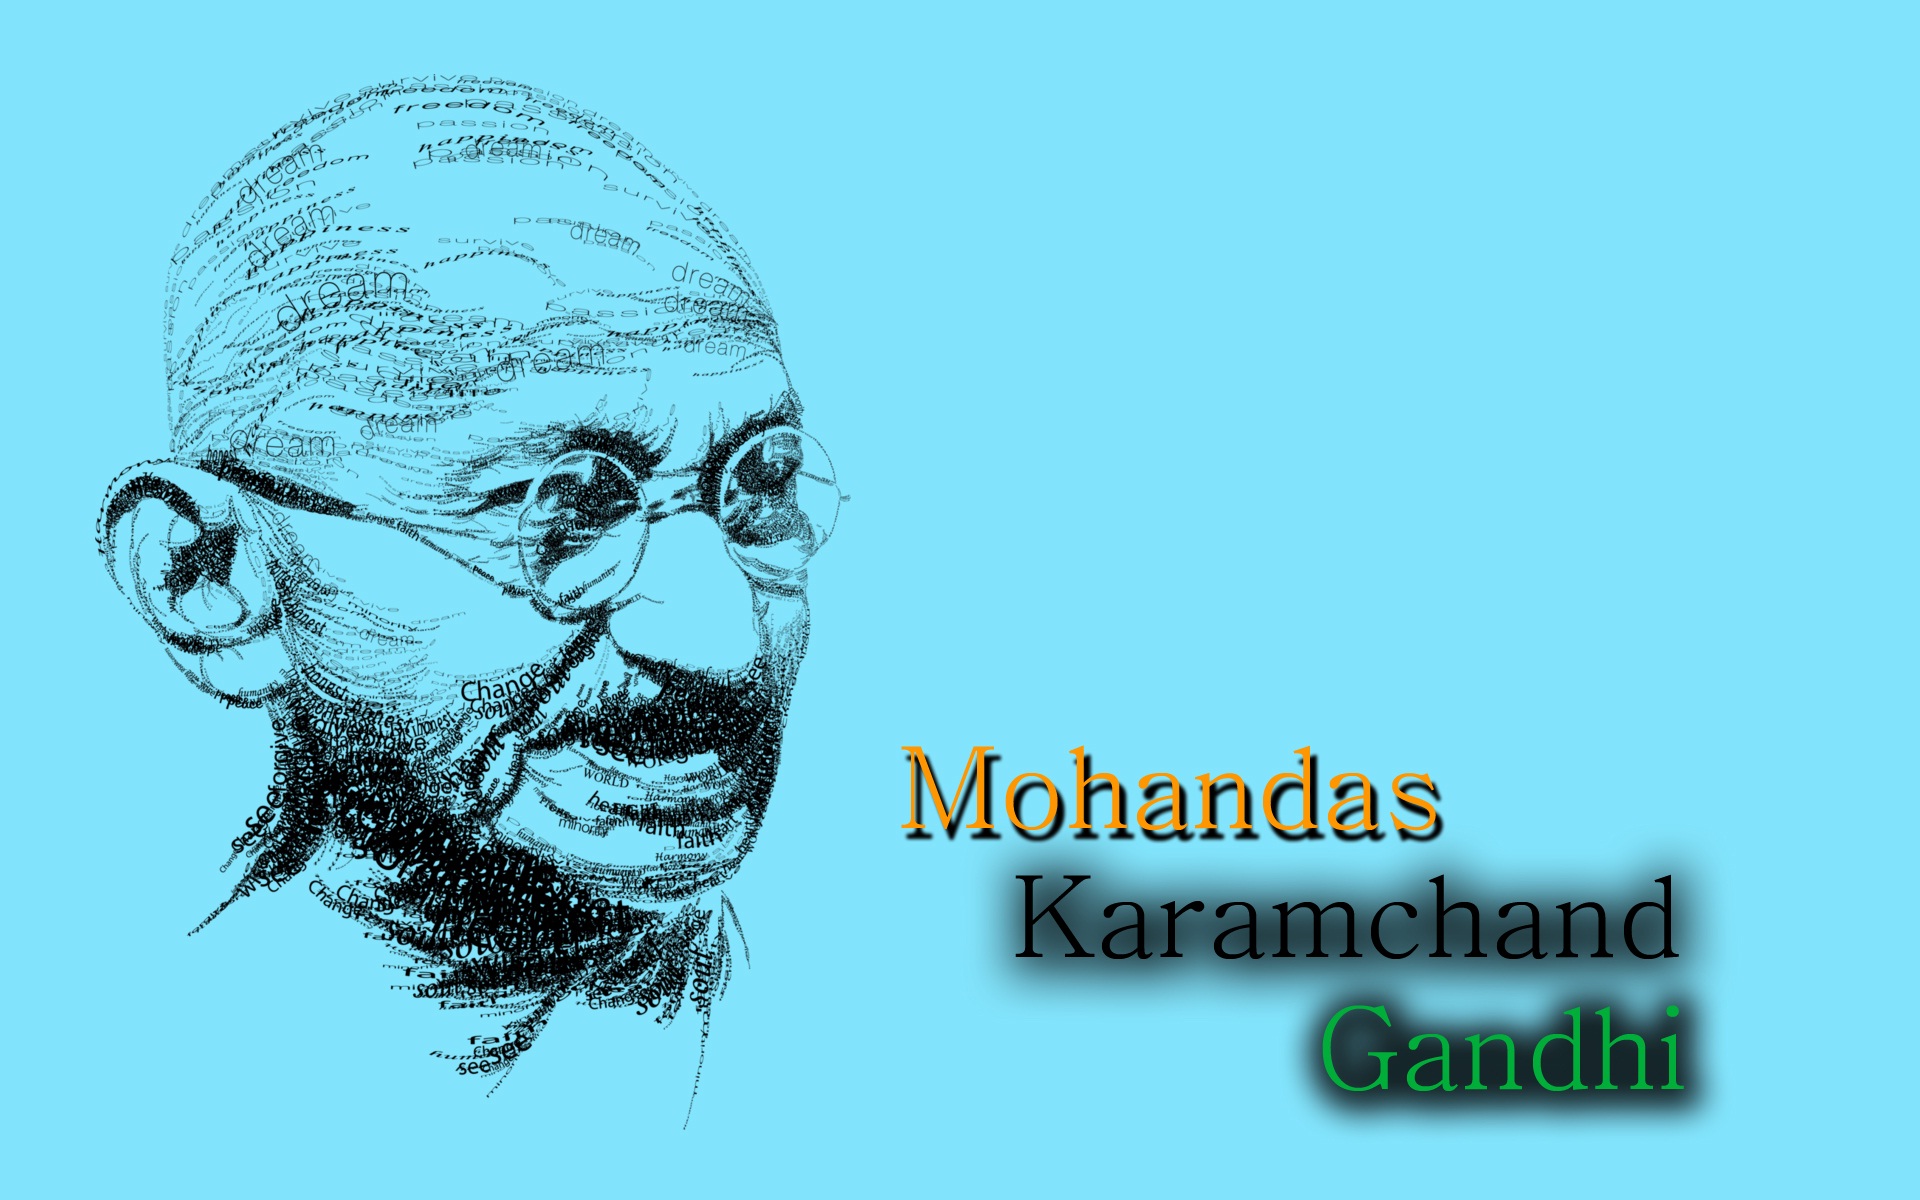 Happy Gandhi Jayanti 2 October - 1920x1200 Wallpaper 